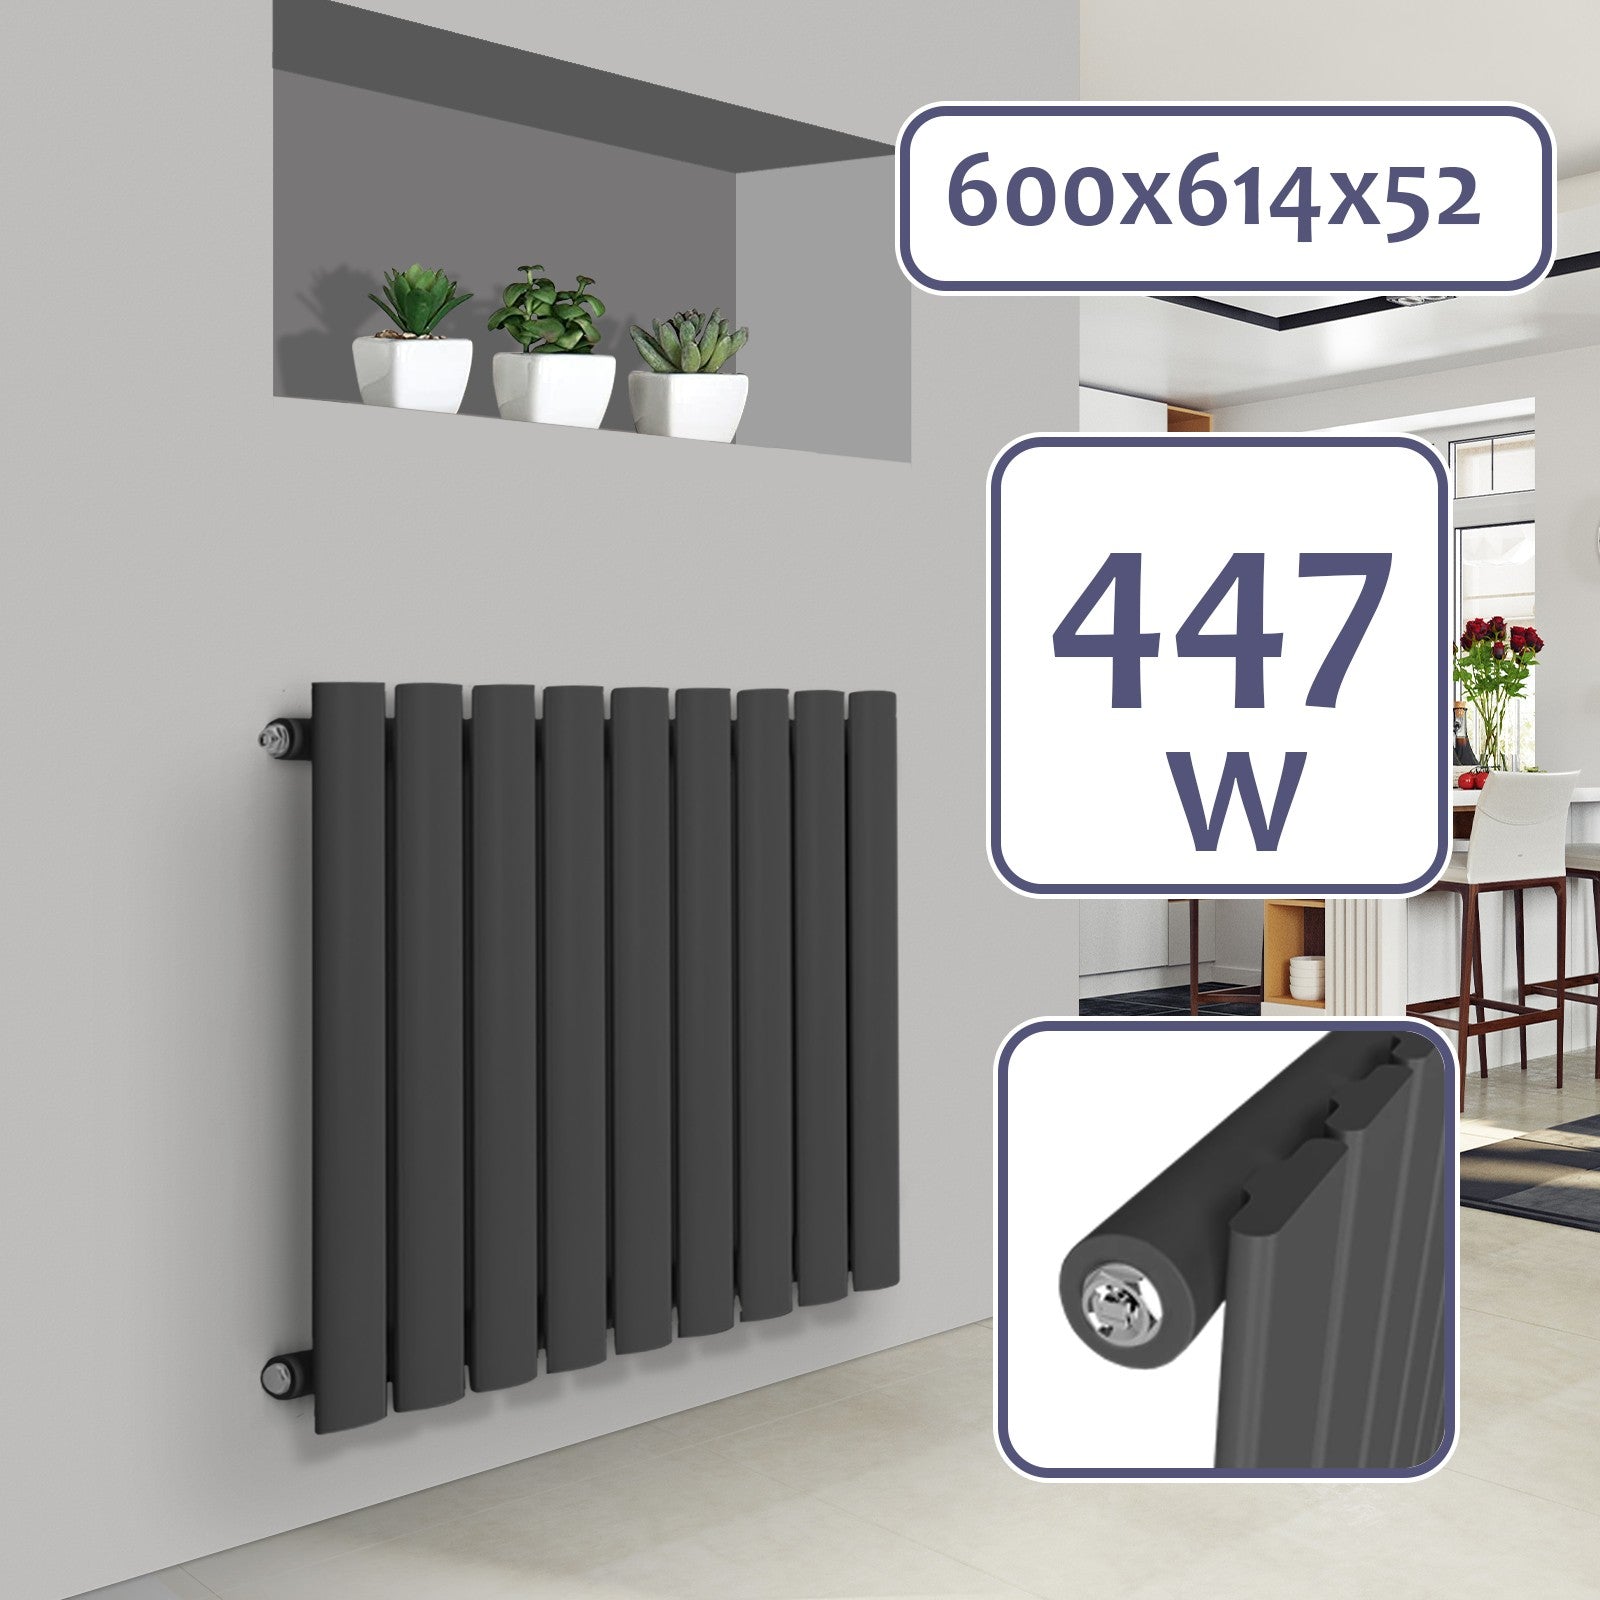 10: AquamarineÂ® radiator - vandret, 600 x 614 mm, 447W, stål, antracit